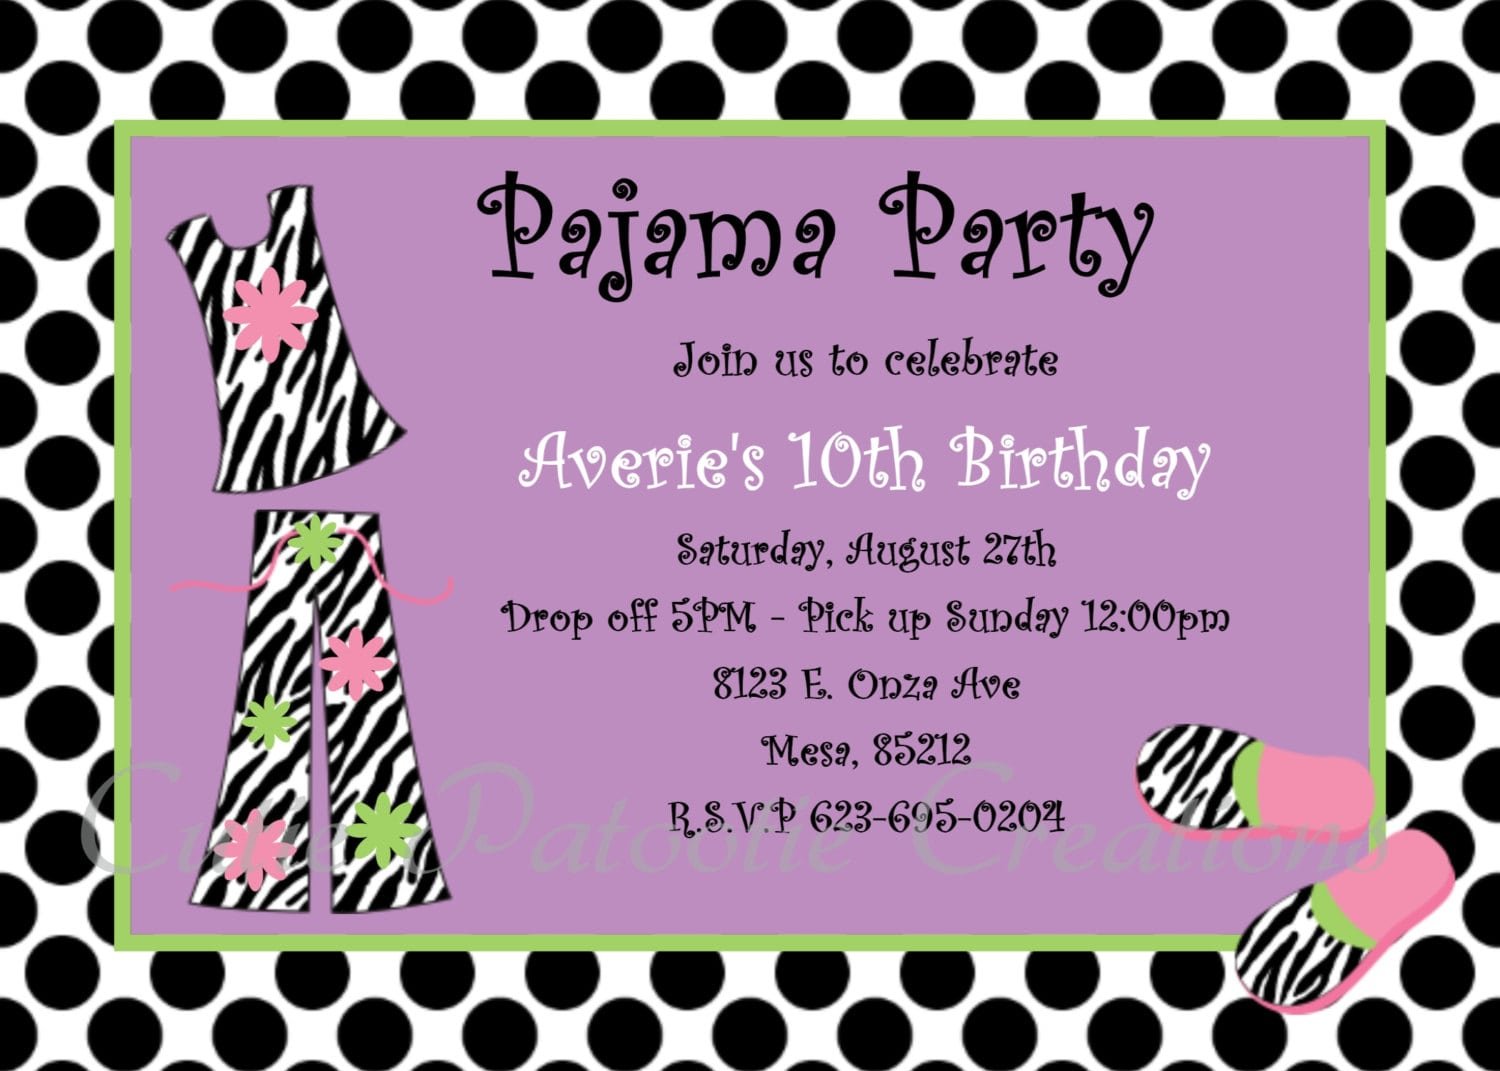 Pajama Party Birthday Invitations